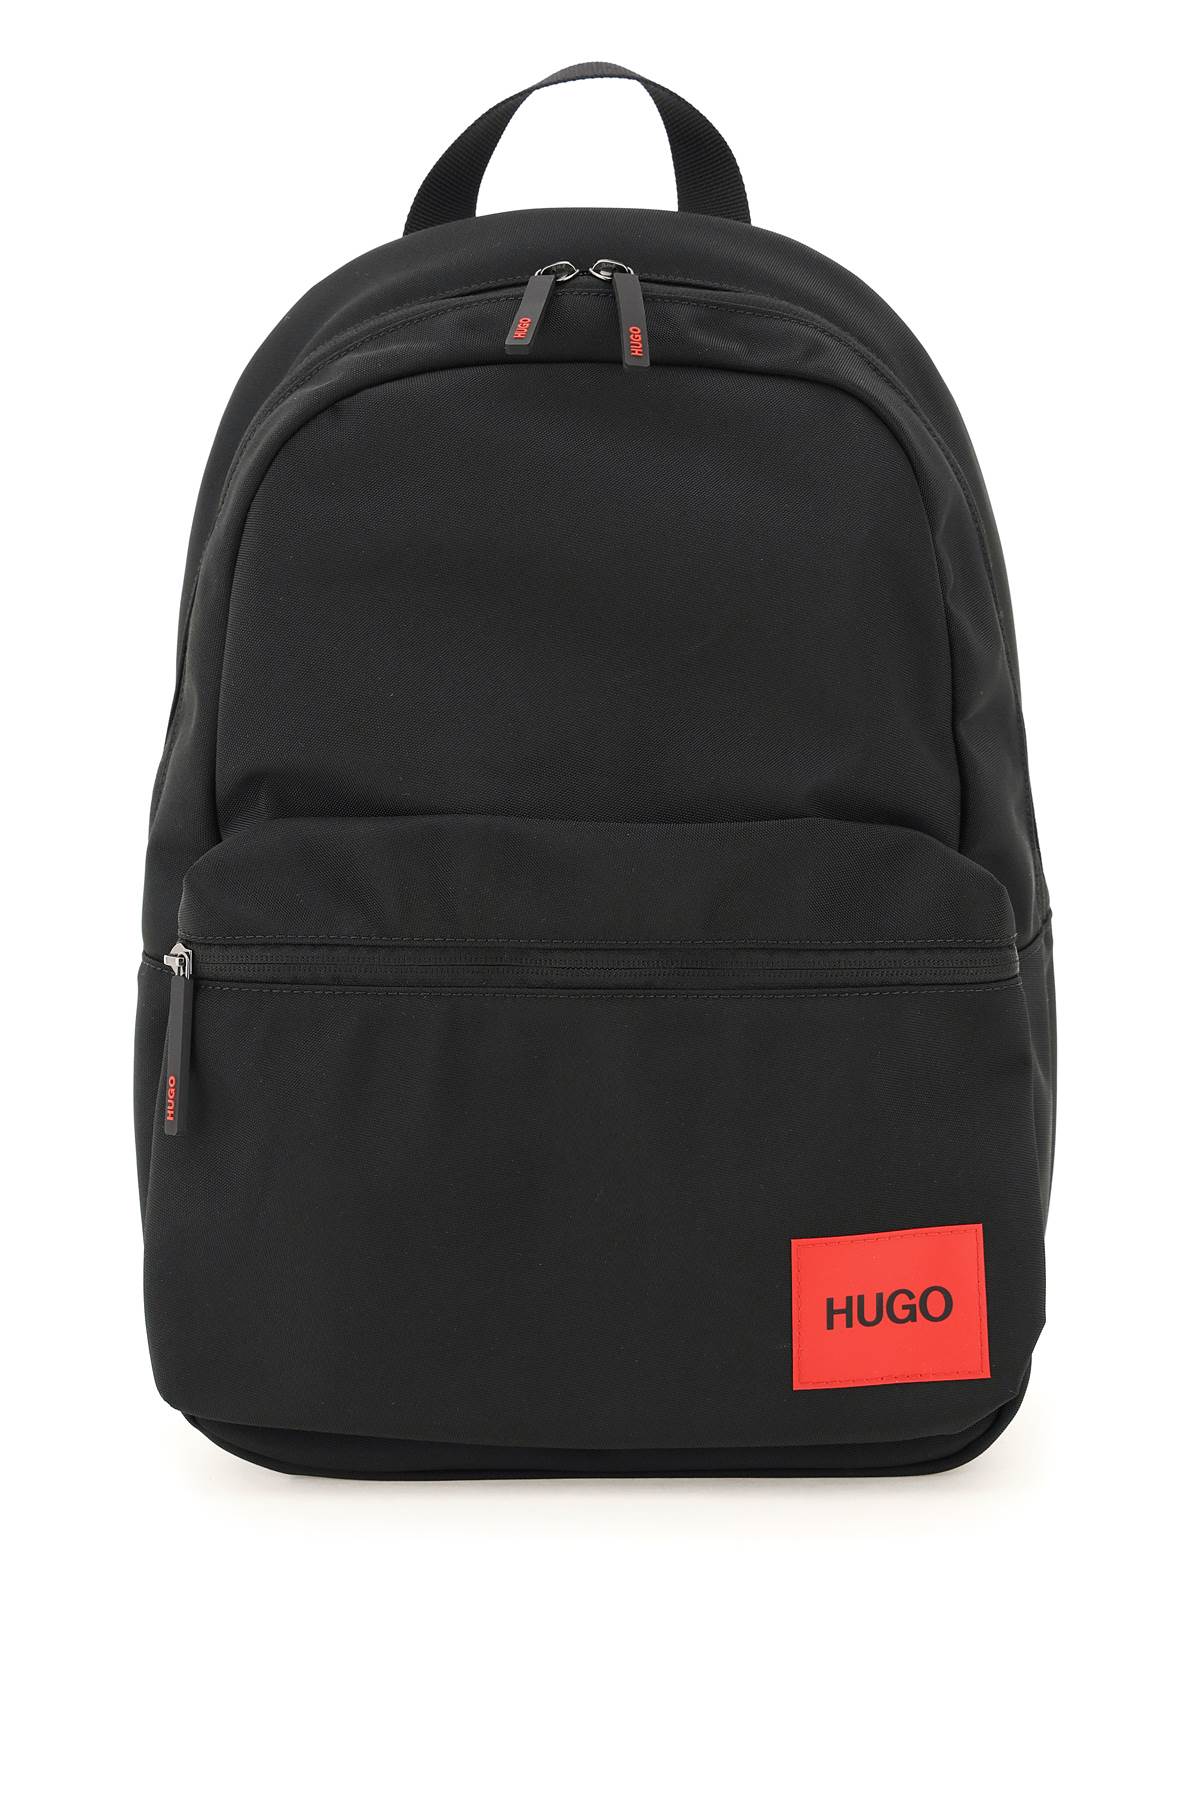 Hugo Boss Recycled Fabric Backpack